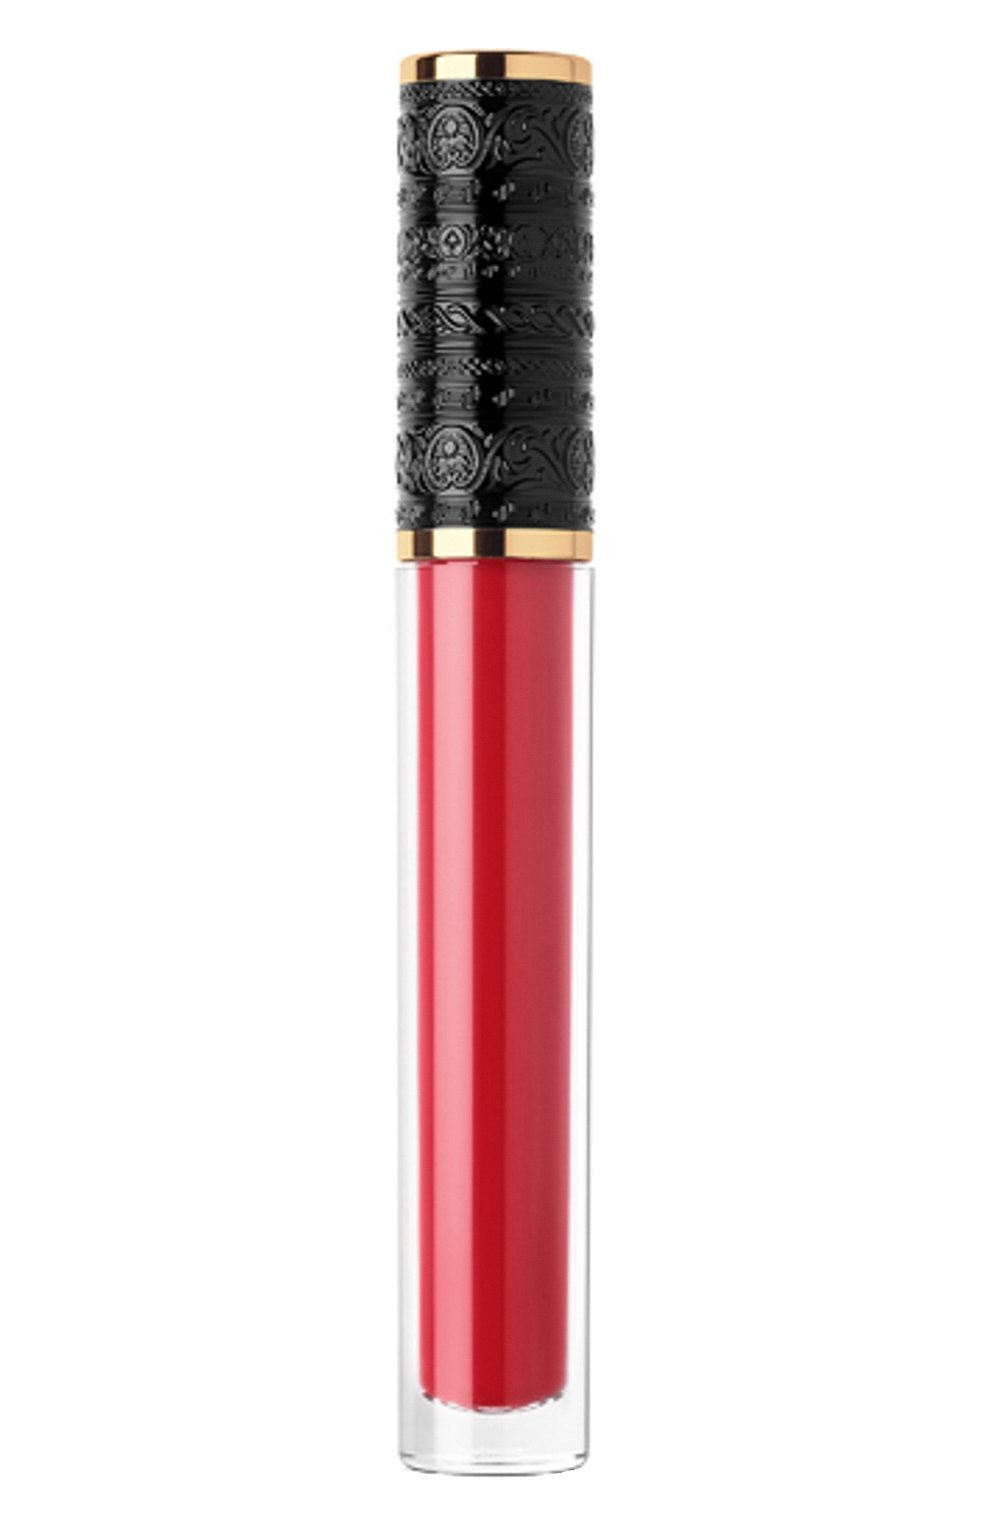 Жидкая матовая помада prohibited rouge (3ml) KILIAN  цвета, арт. 3700550221906 | Фото 1